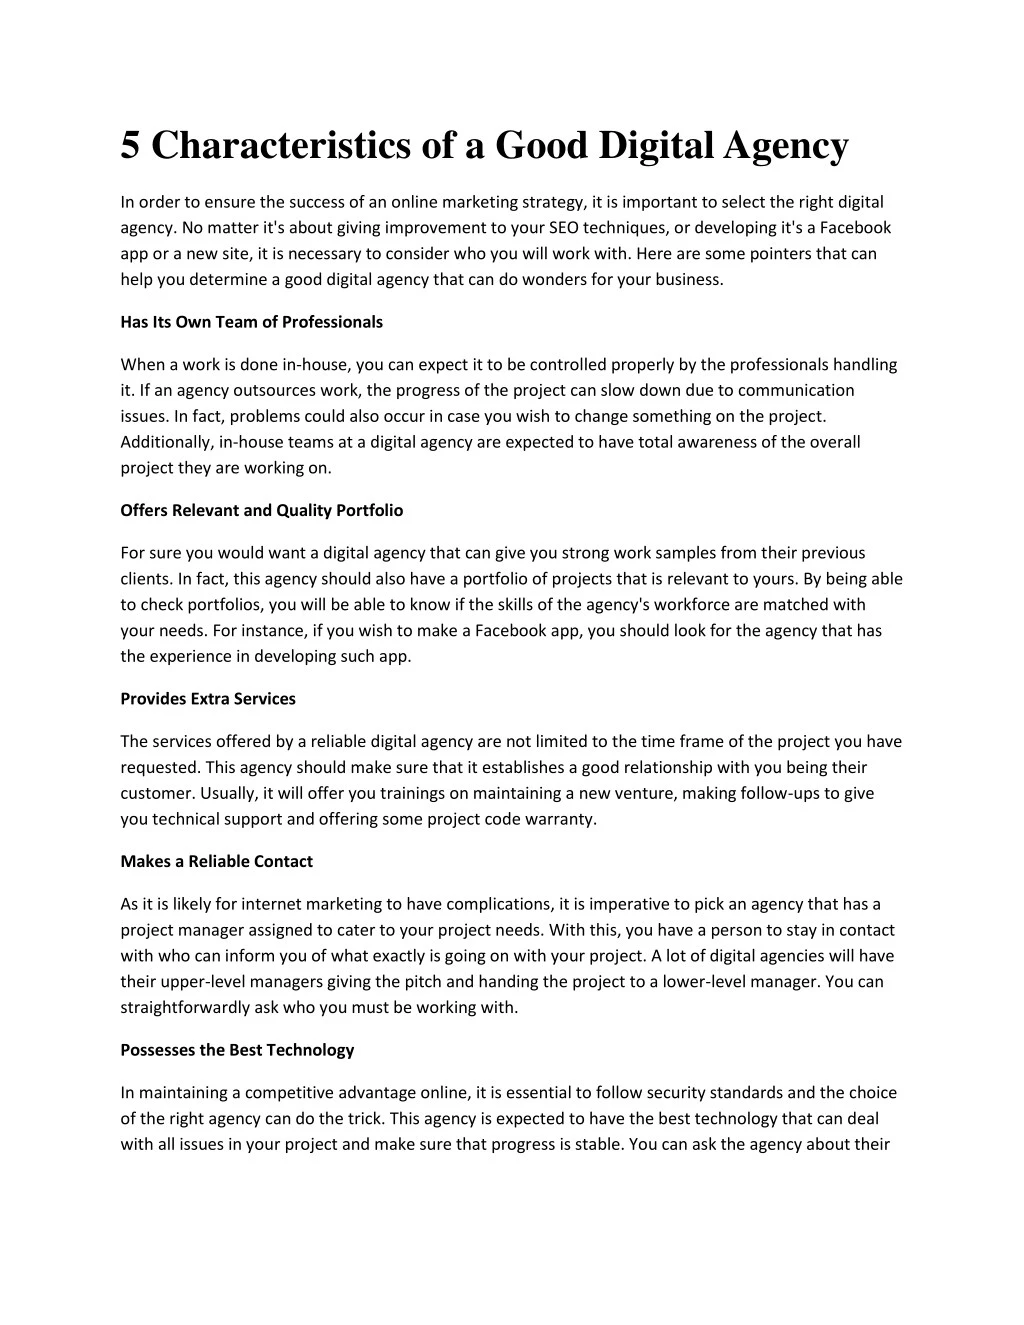 5 characteristics of a good digital agency